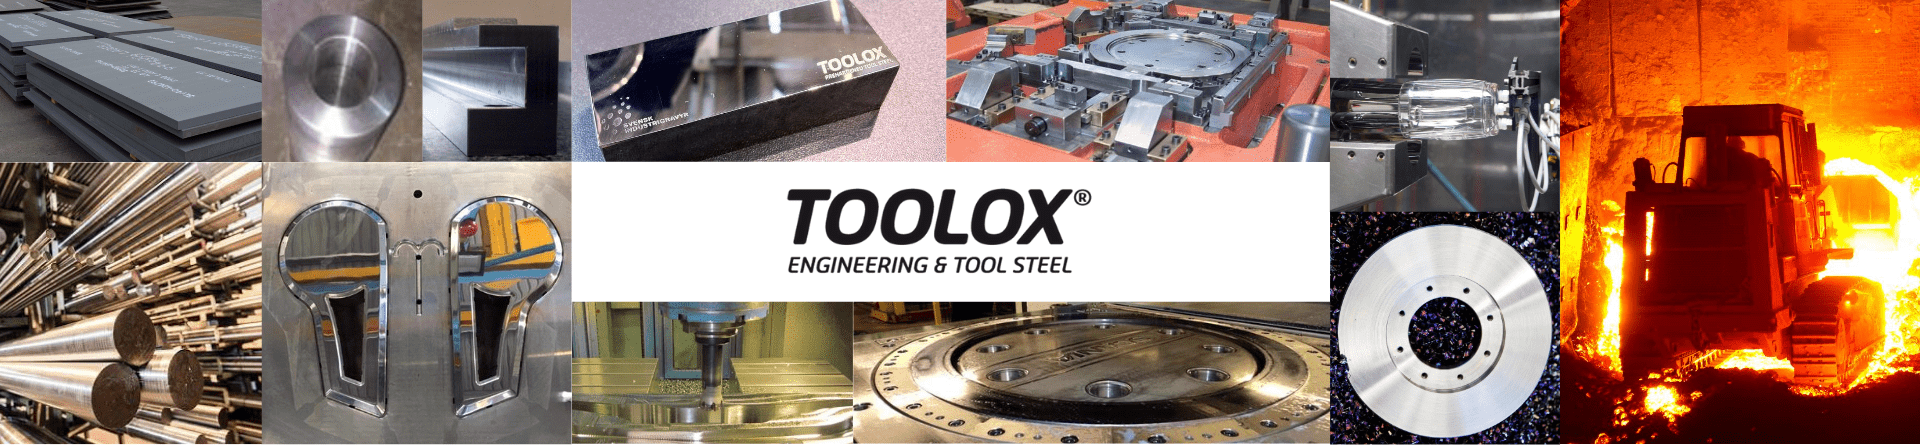 pre-hardened steel, engineering and tool steel, Toolox tool steel